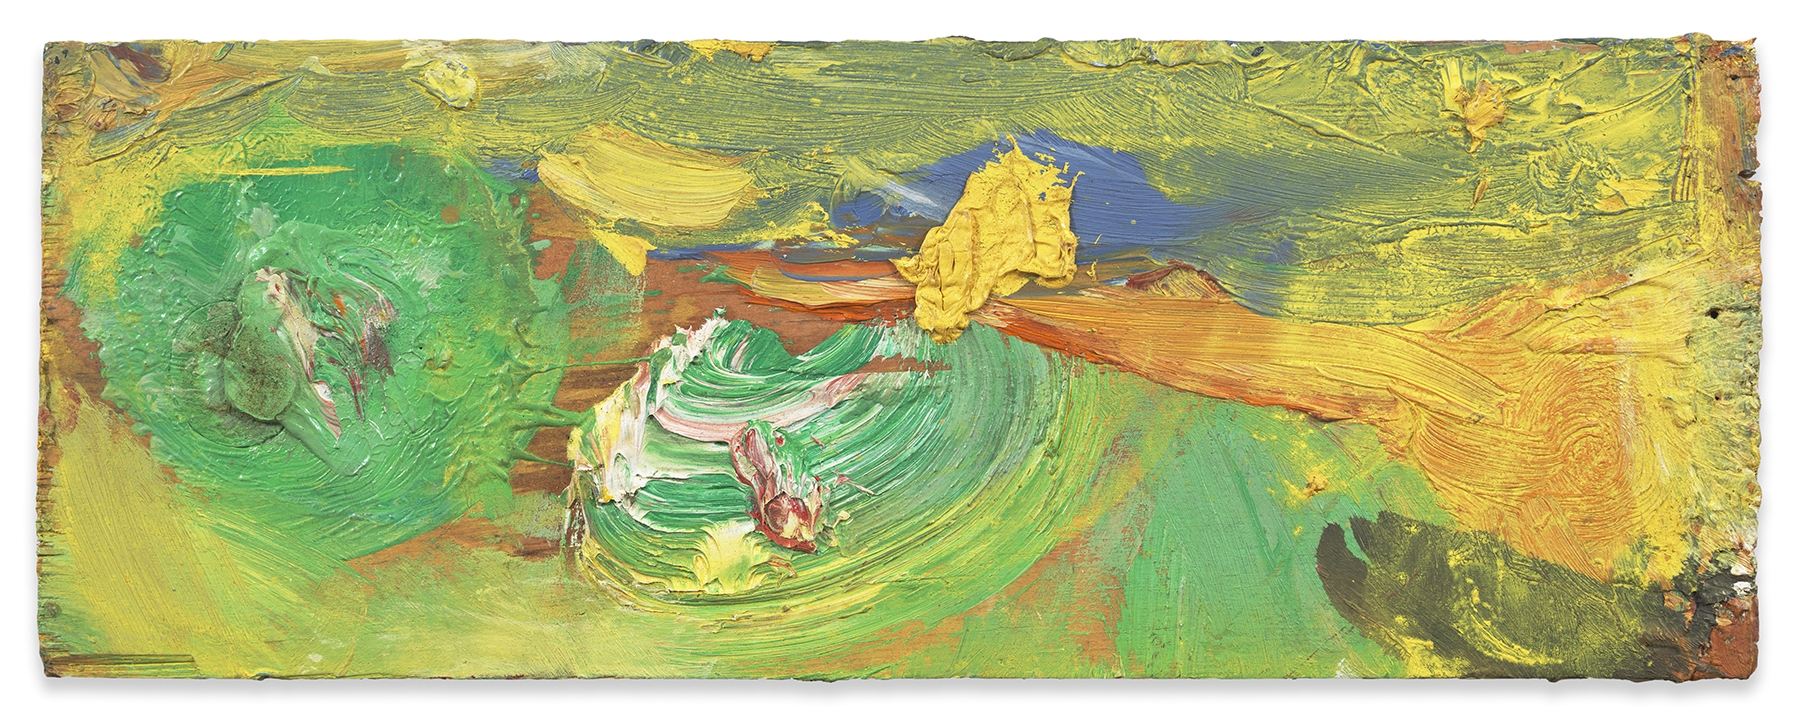 Hans Hofmann

Untitled, 1960-1965 (c)

Oil on panel

4 3/4h x 12 1/2w in

HH056